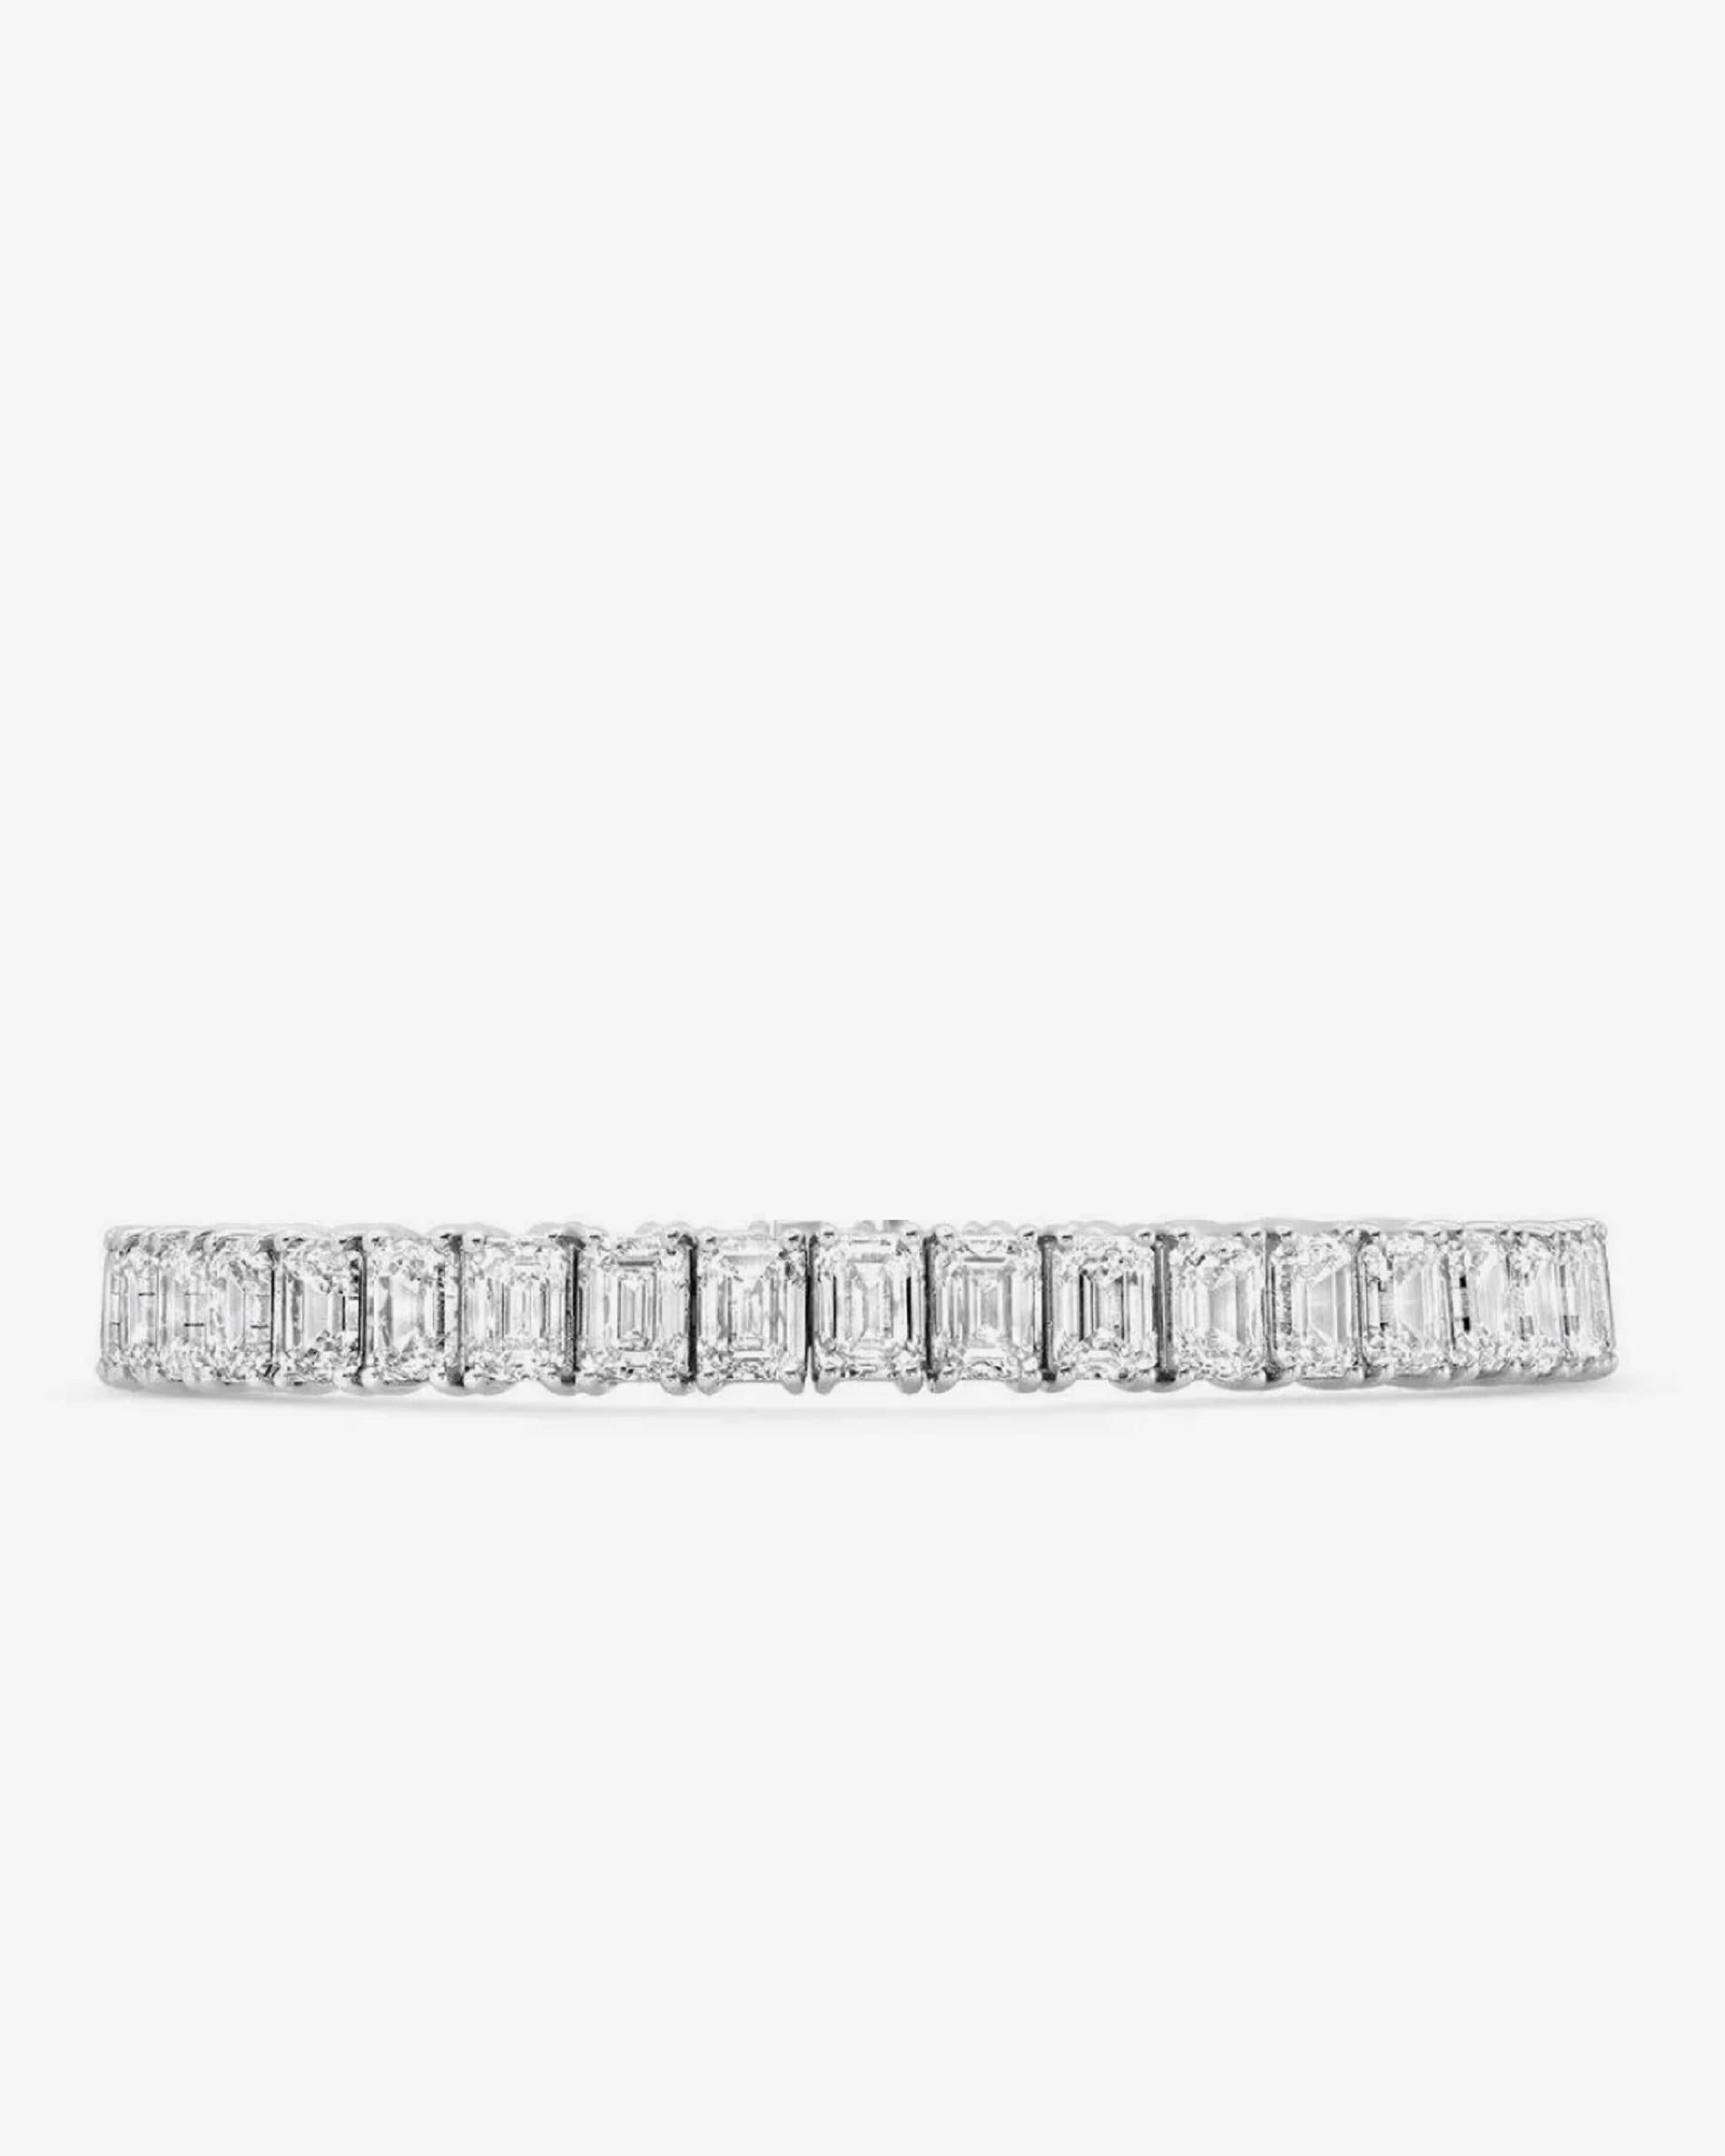 18 Carat Emerald Cut Diamond Emerald Cut Diamonds Tennis Bracelet In Excellent Condition For Sale In Rome, IT